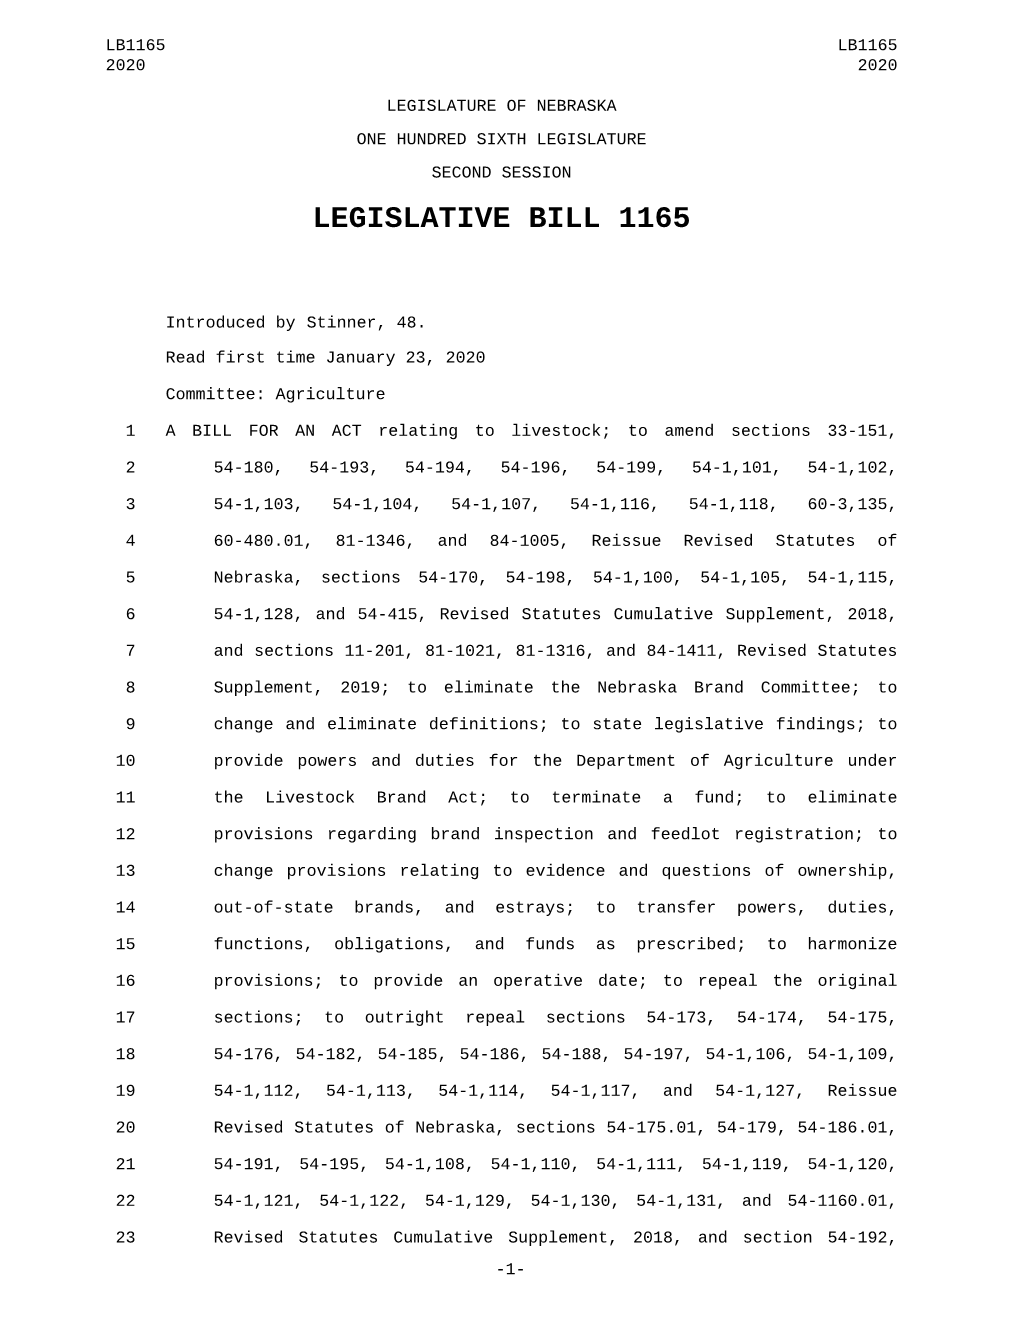 Legislative Bill 1165